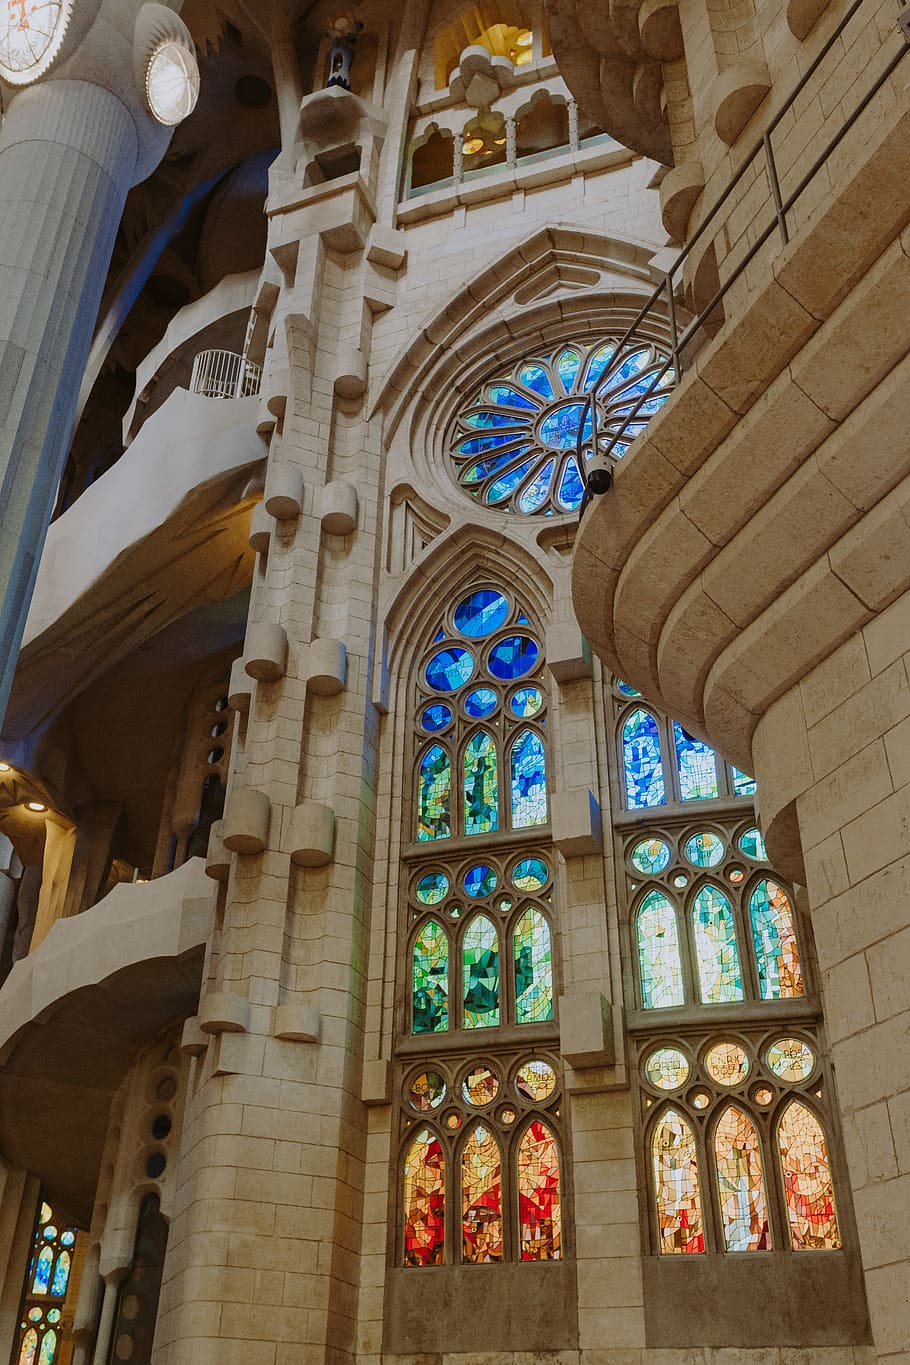 Sagrada Familia - the cathedral designed by Gaudi, Barcelona, Spain